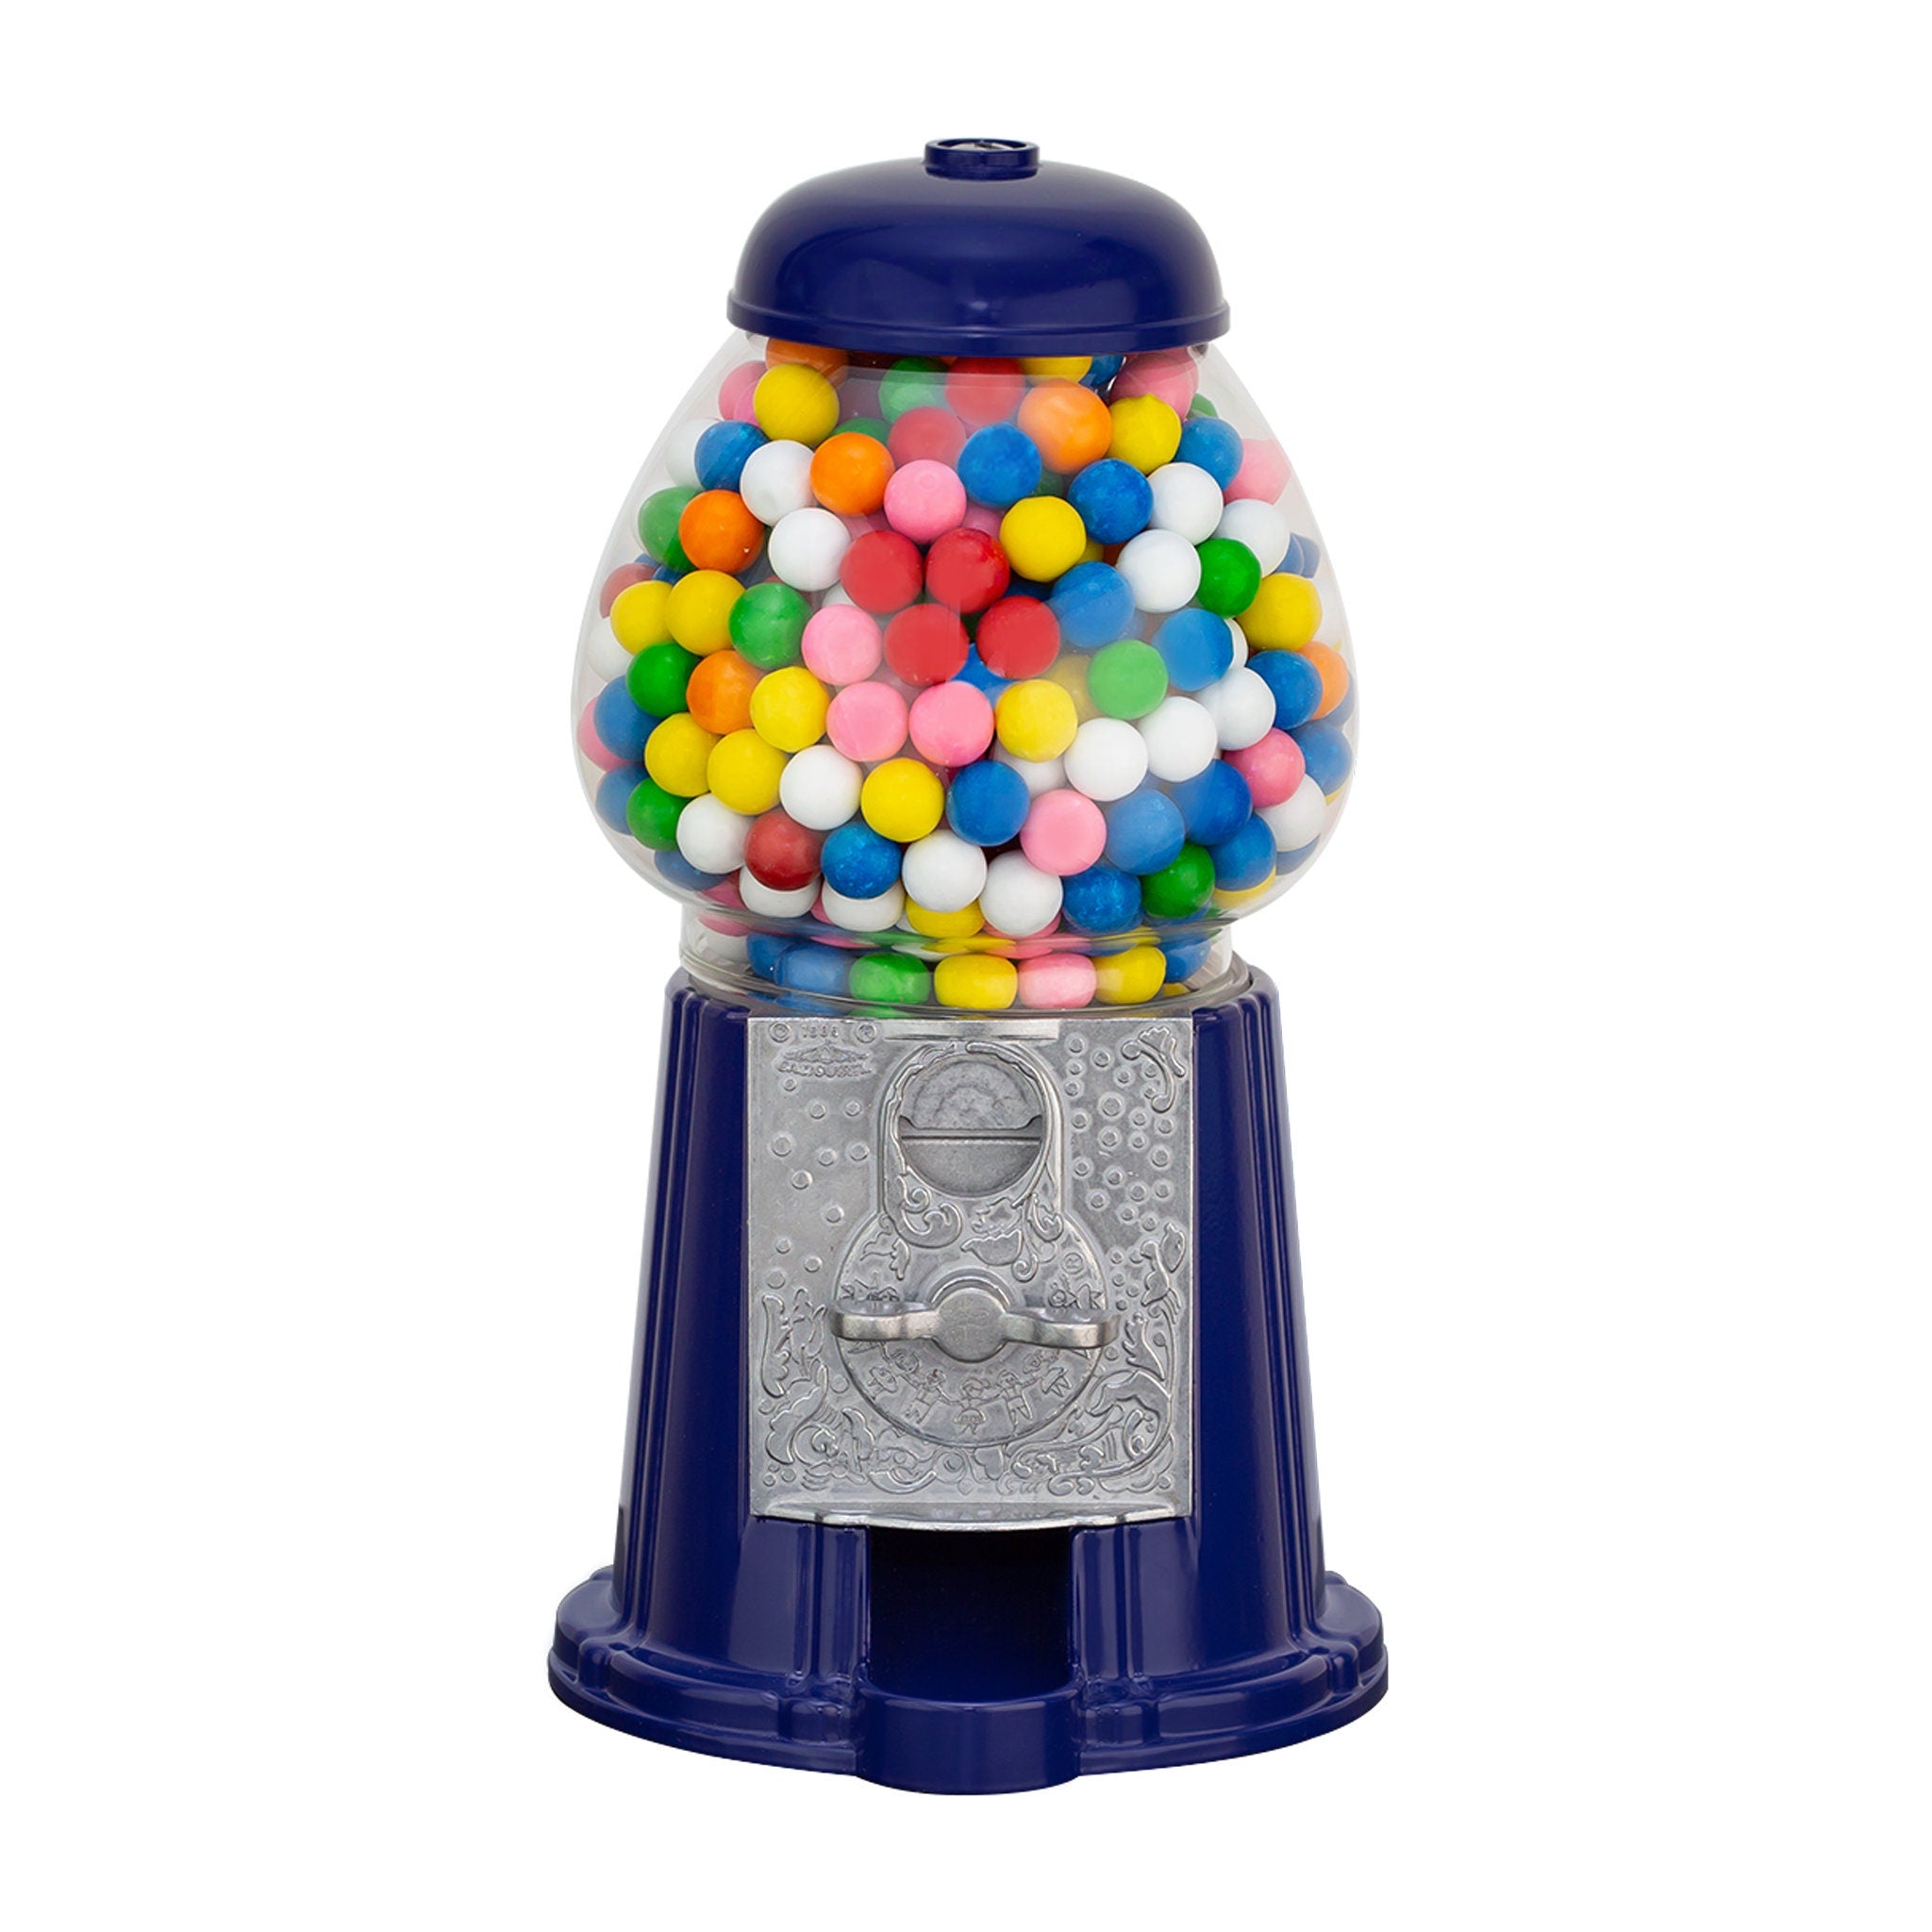 Gumball Dreams Classic Gumball Machine / Candy Dispenser - Navy Blue